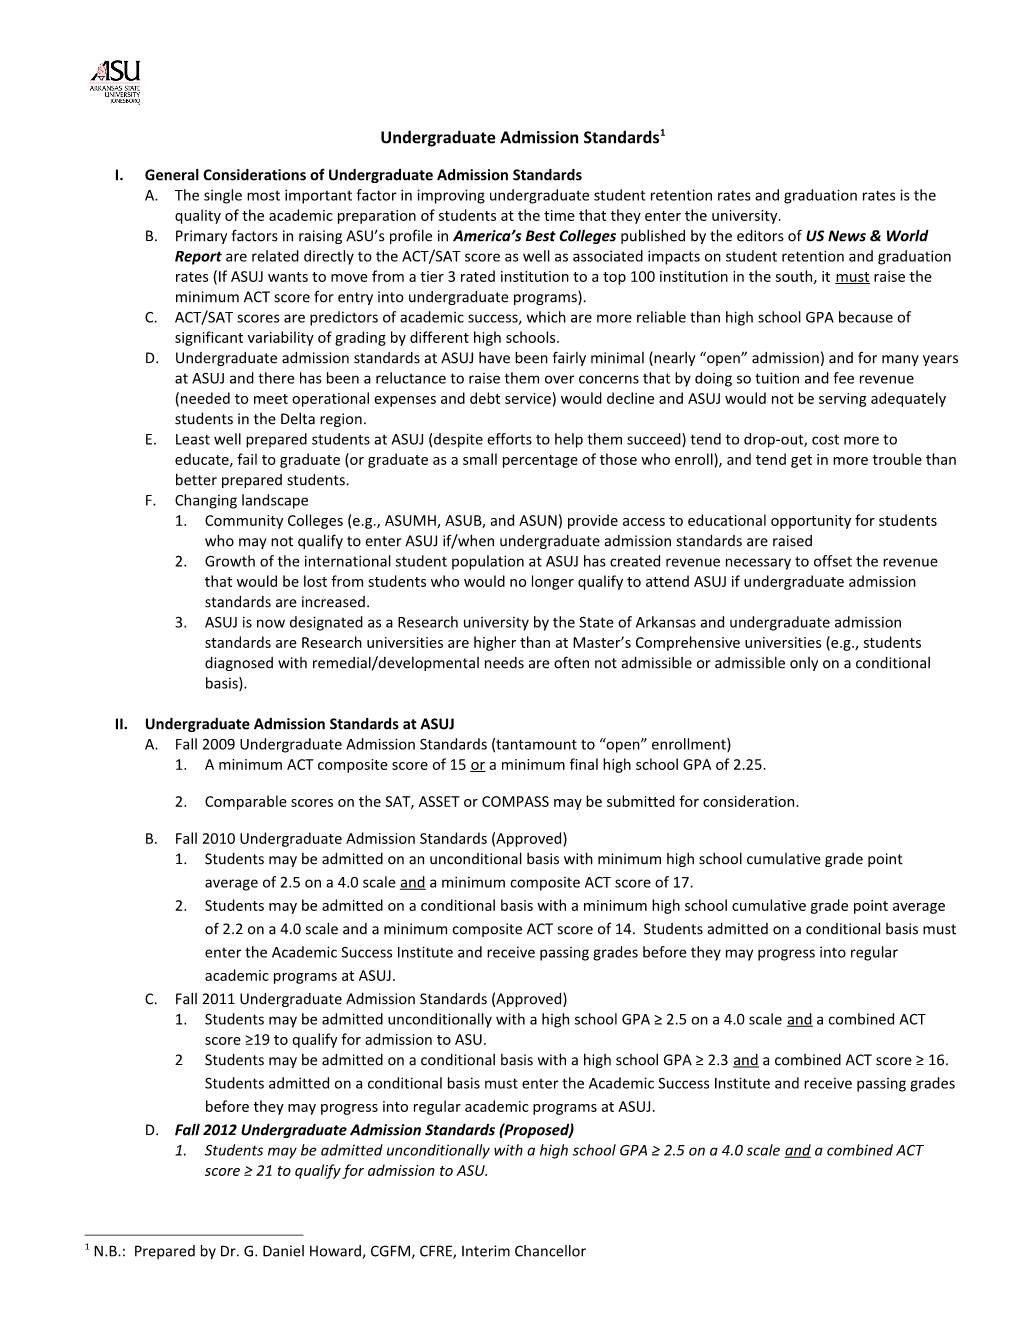 I.General Considerations of Undergraduate Admission Standards